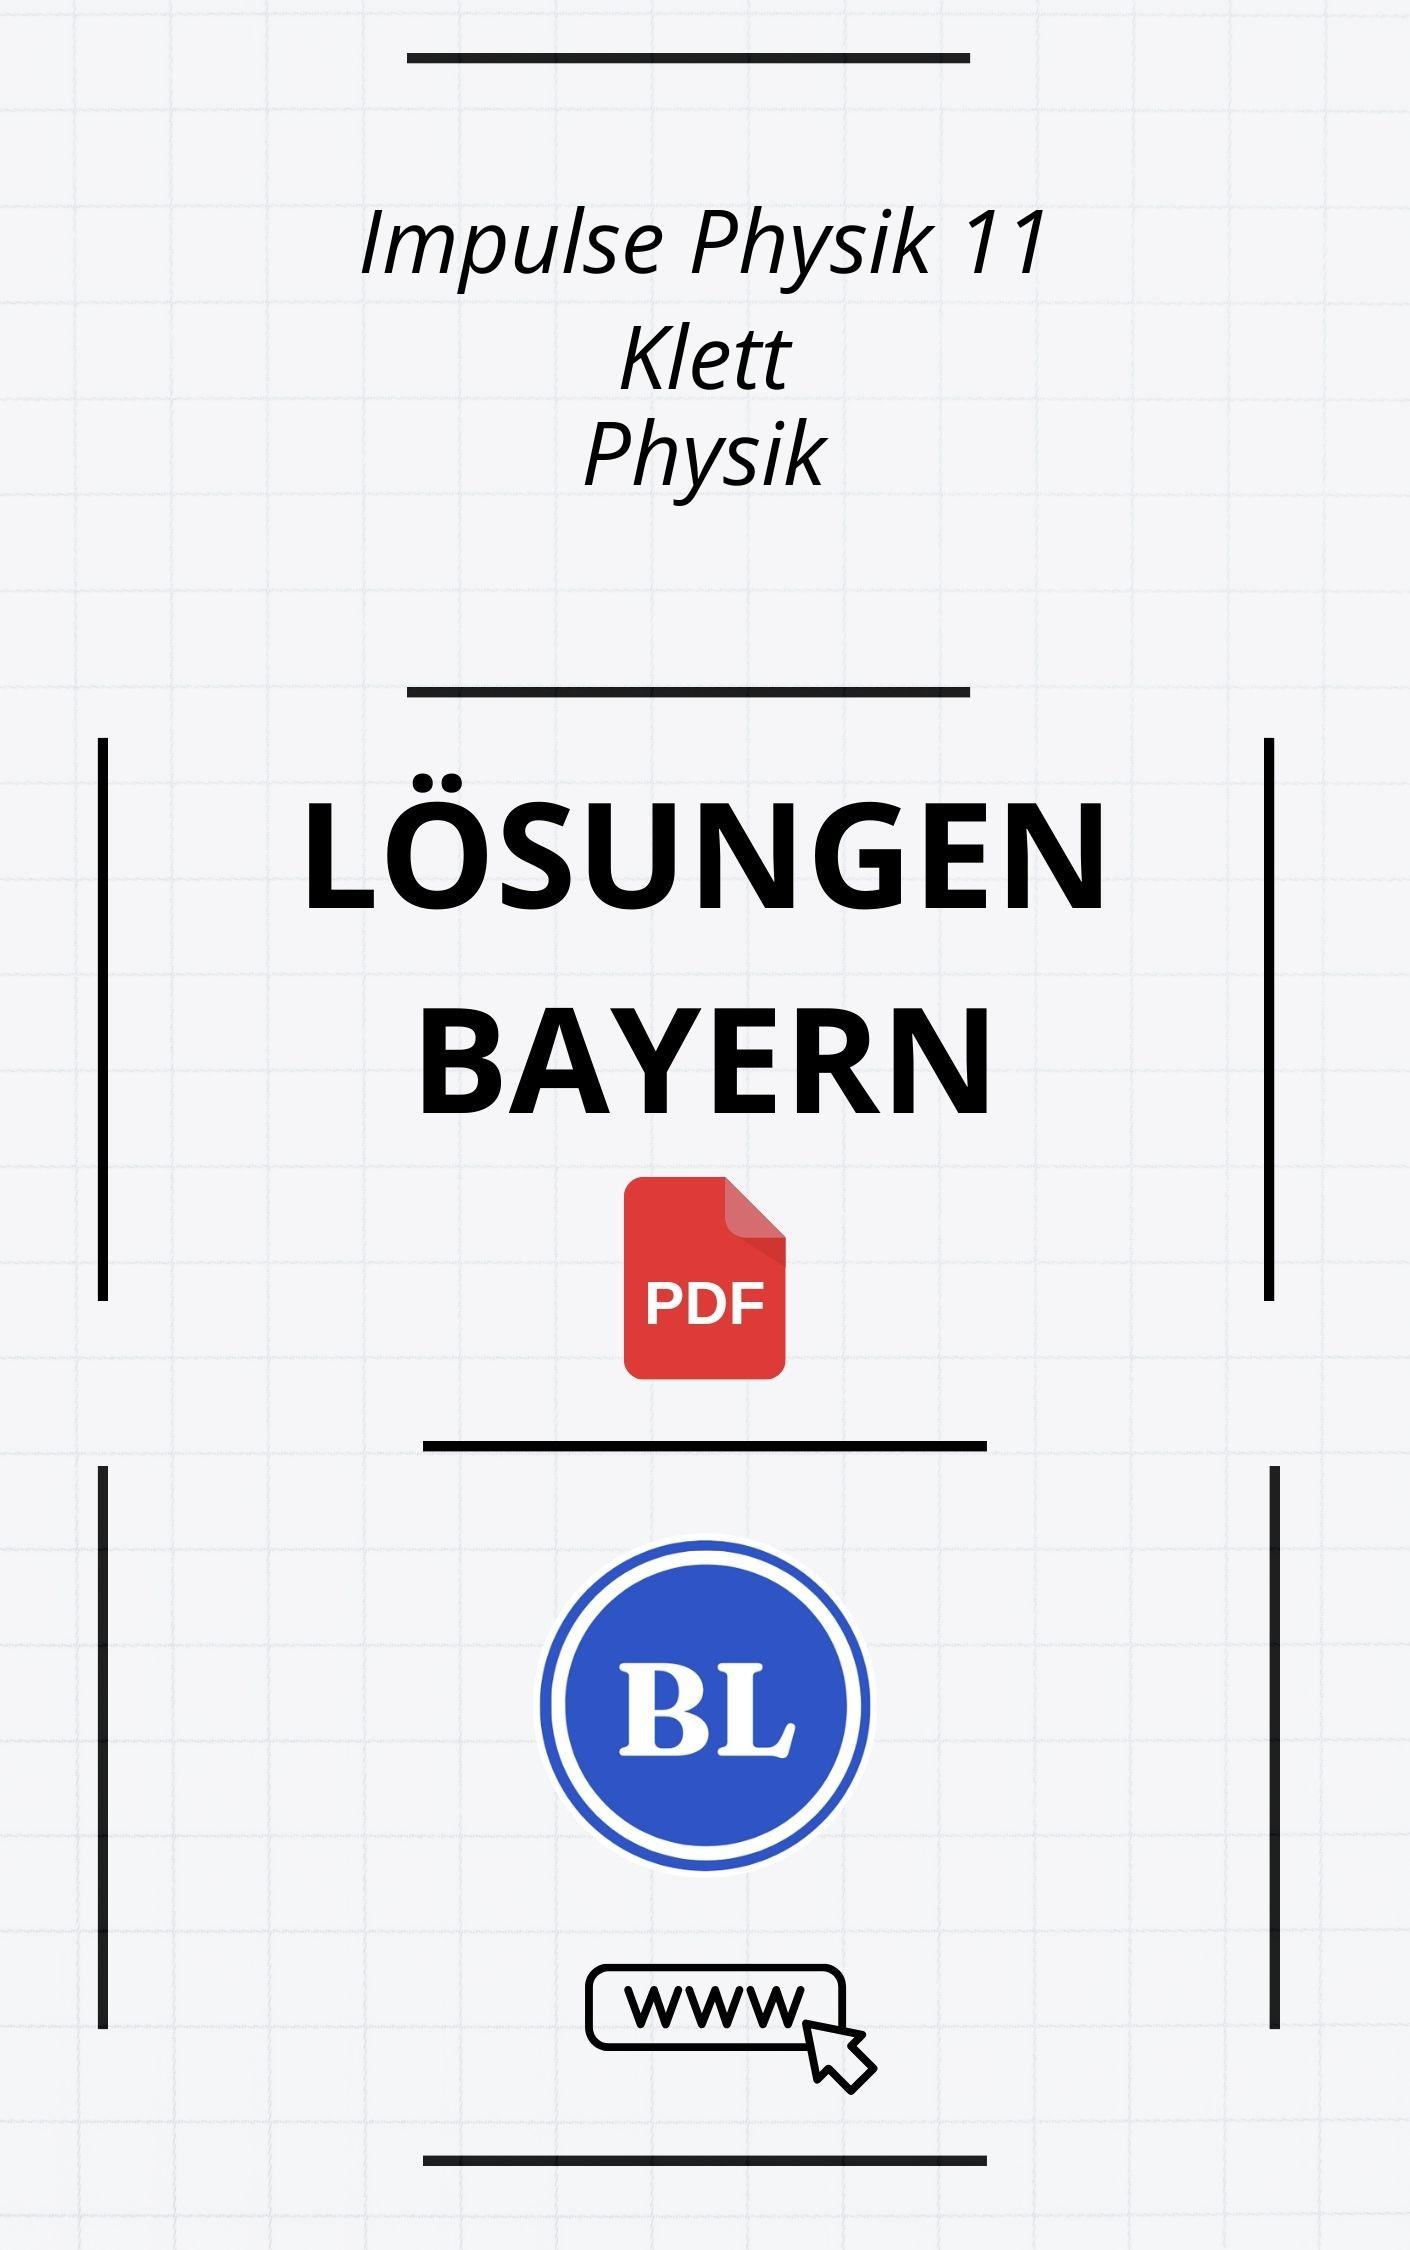 Impulse Physik 11 Lösungen Bayern